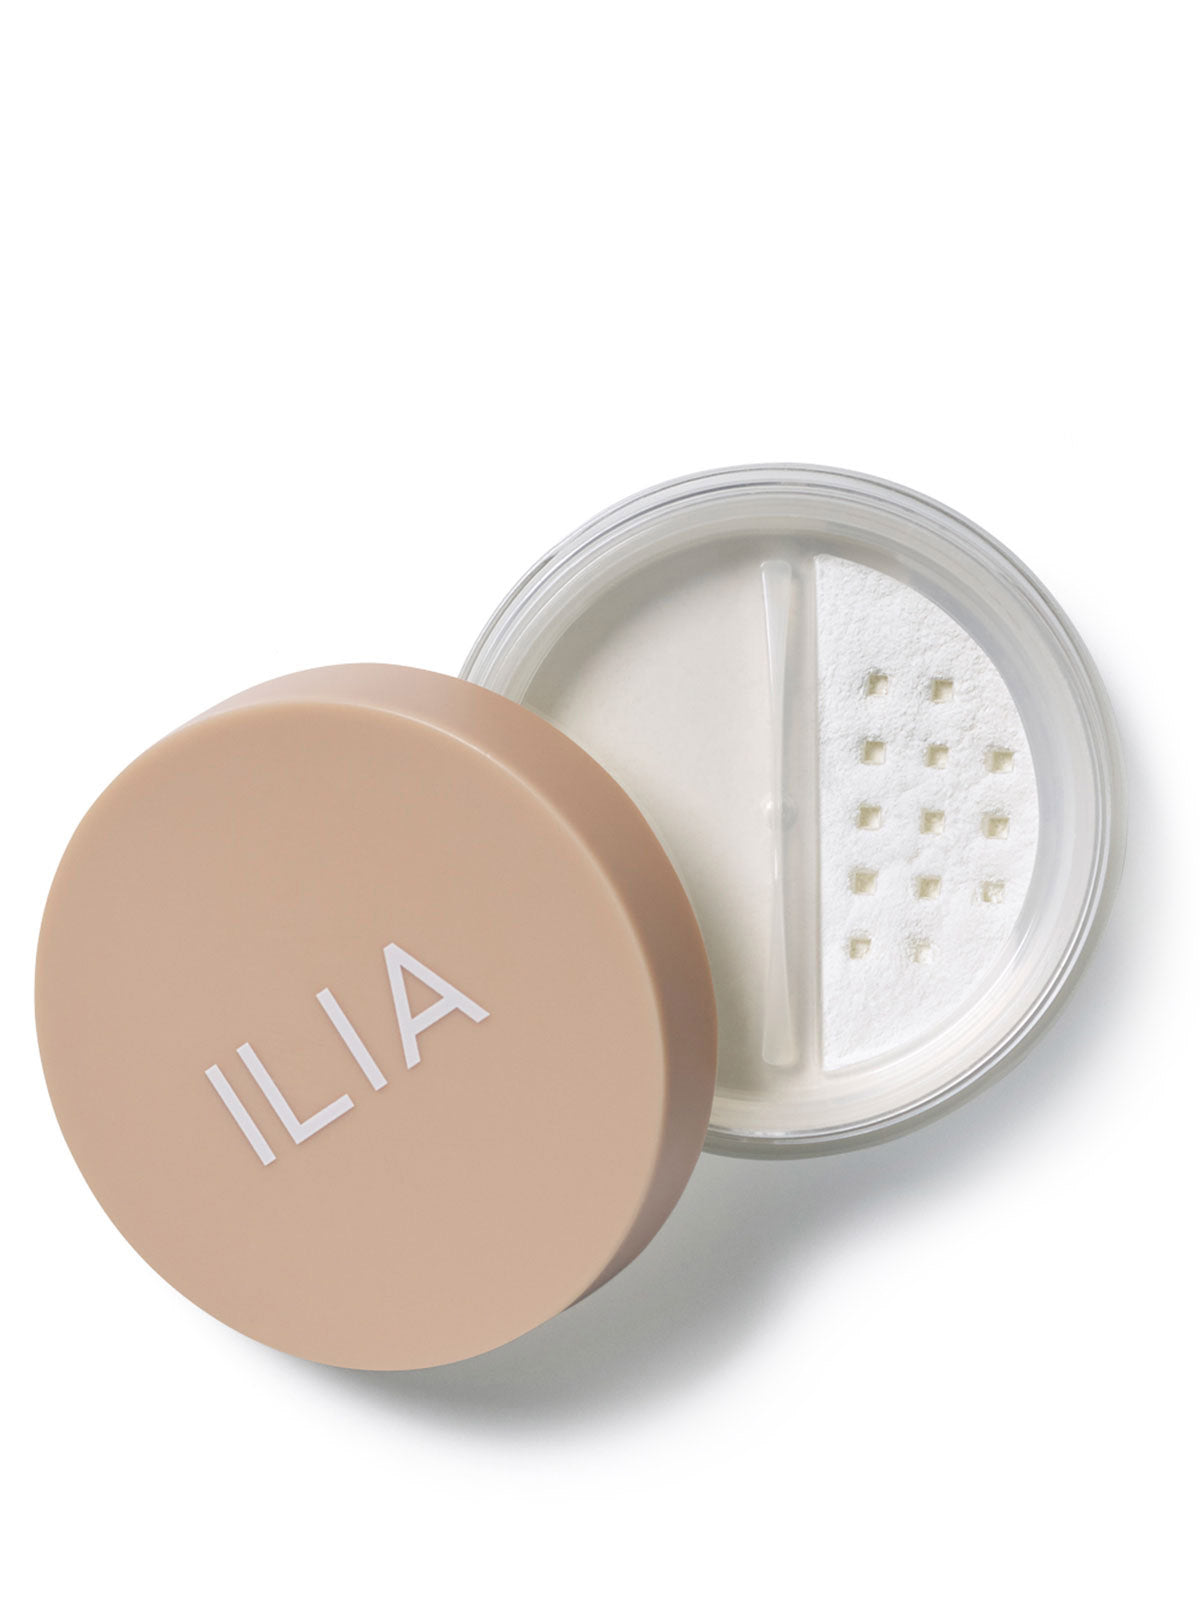 ILIA Beauty Powder - Fade Into You